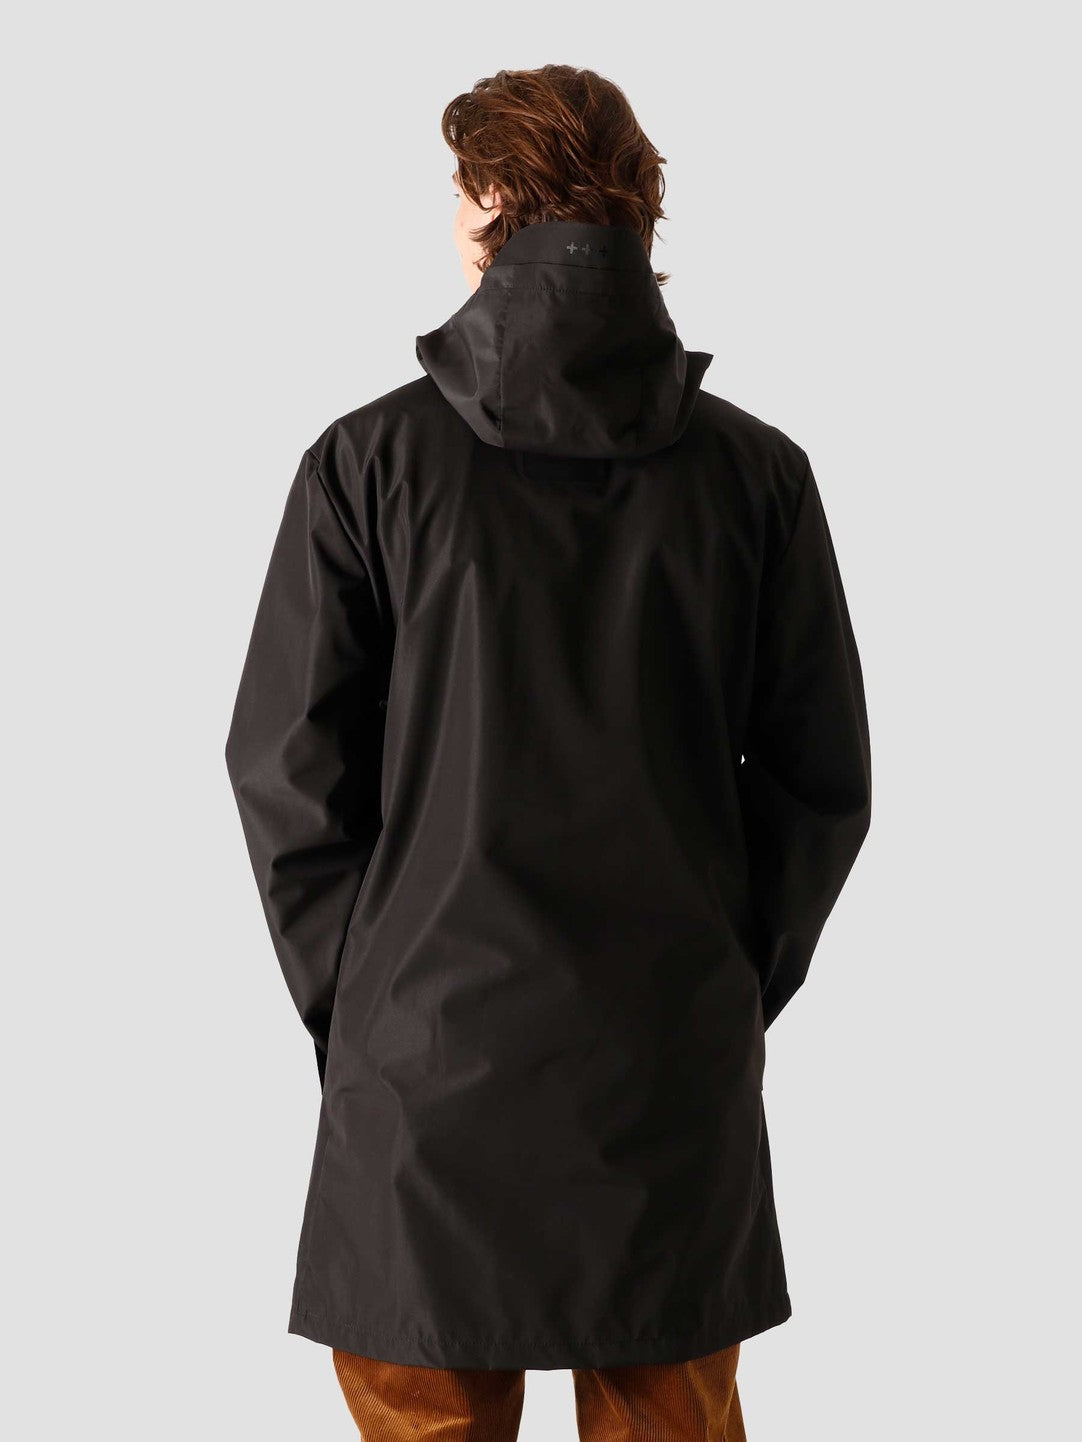 QB220 Rain Coat Black